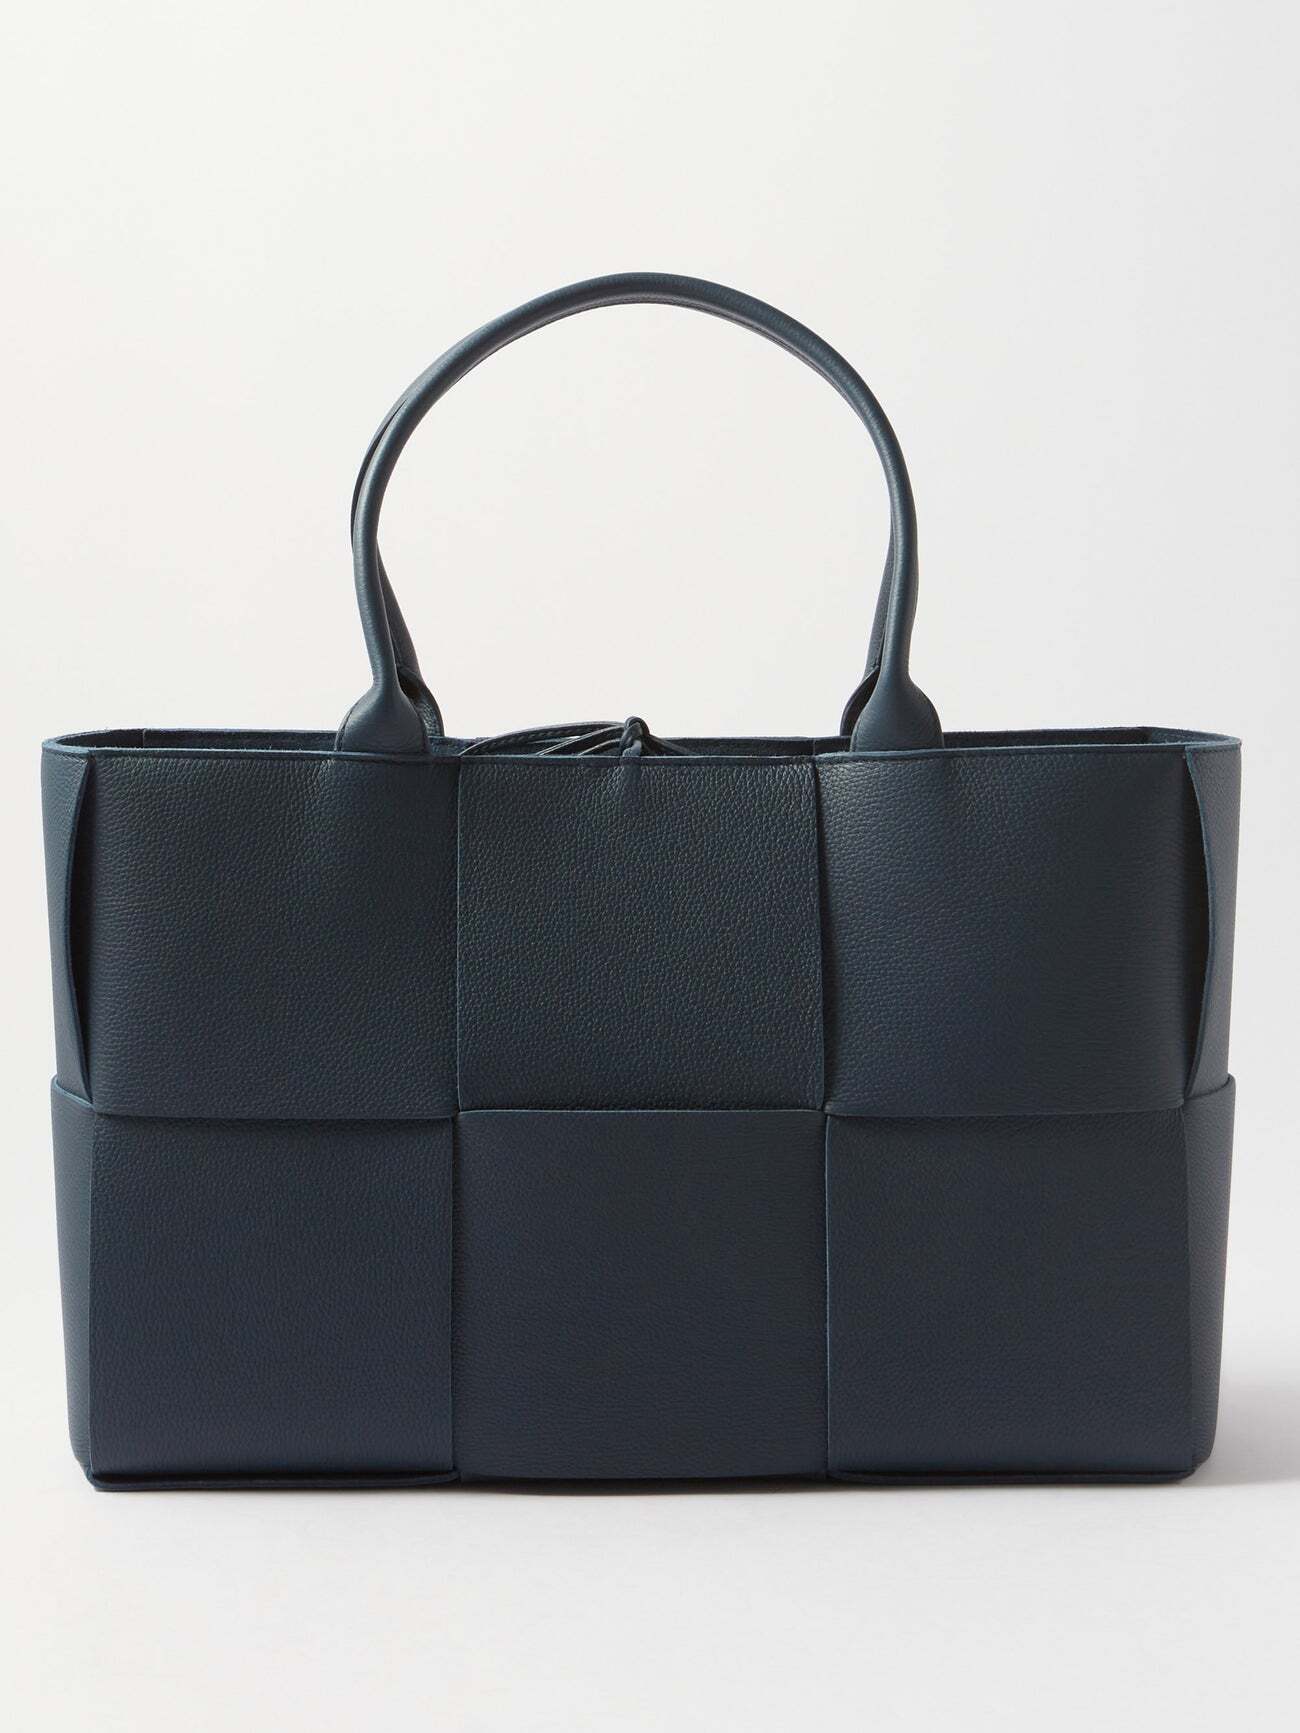 Bottega Veneta - Arco Medium Intrecciato-leather Tote Bag - Womens - Navy